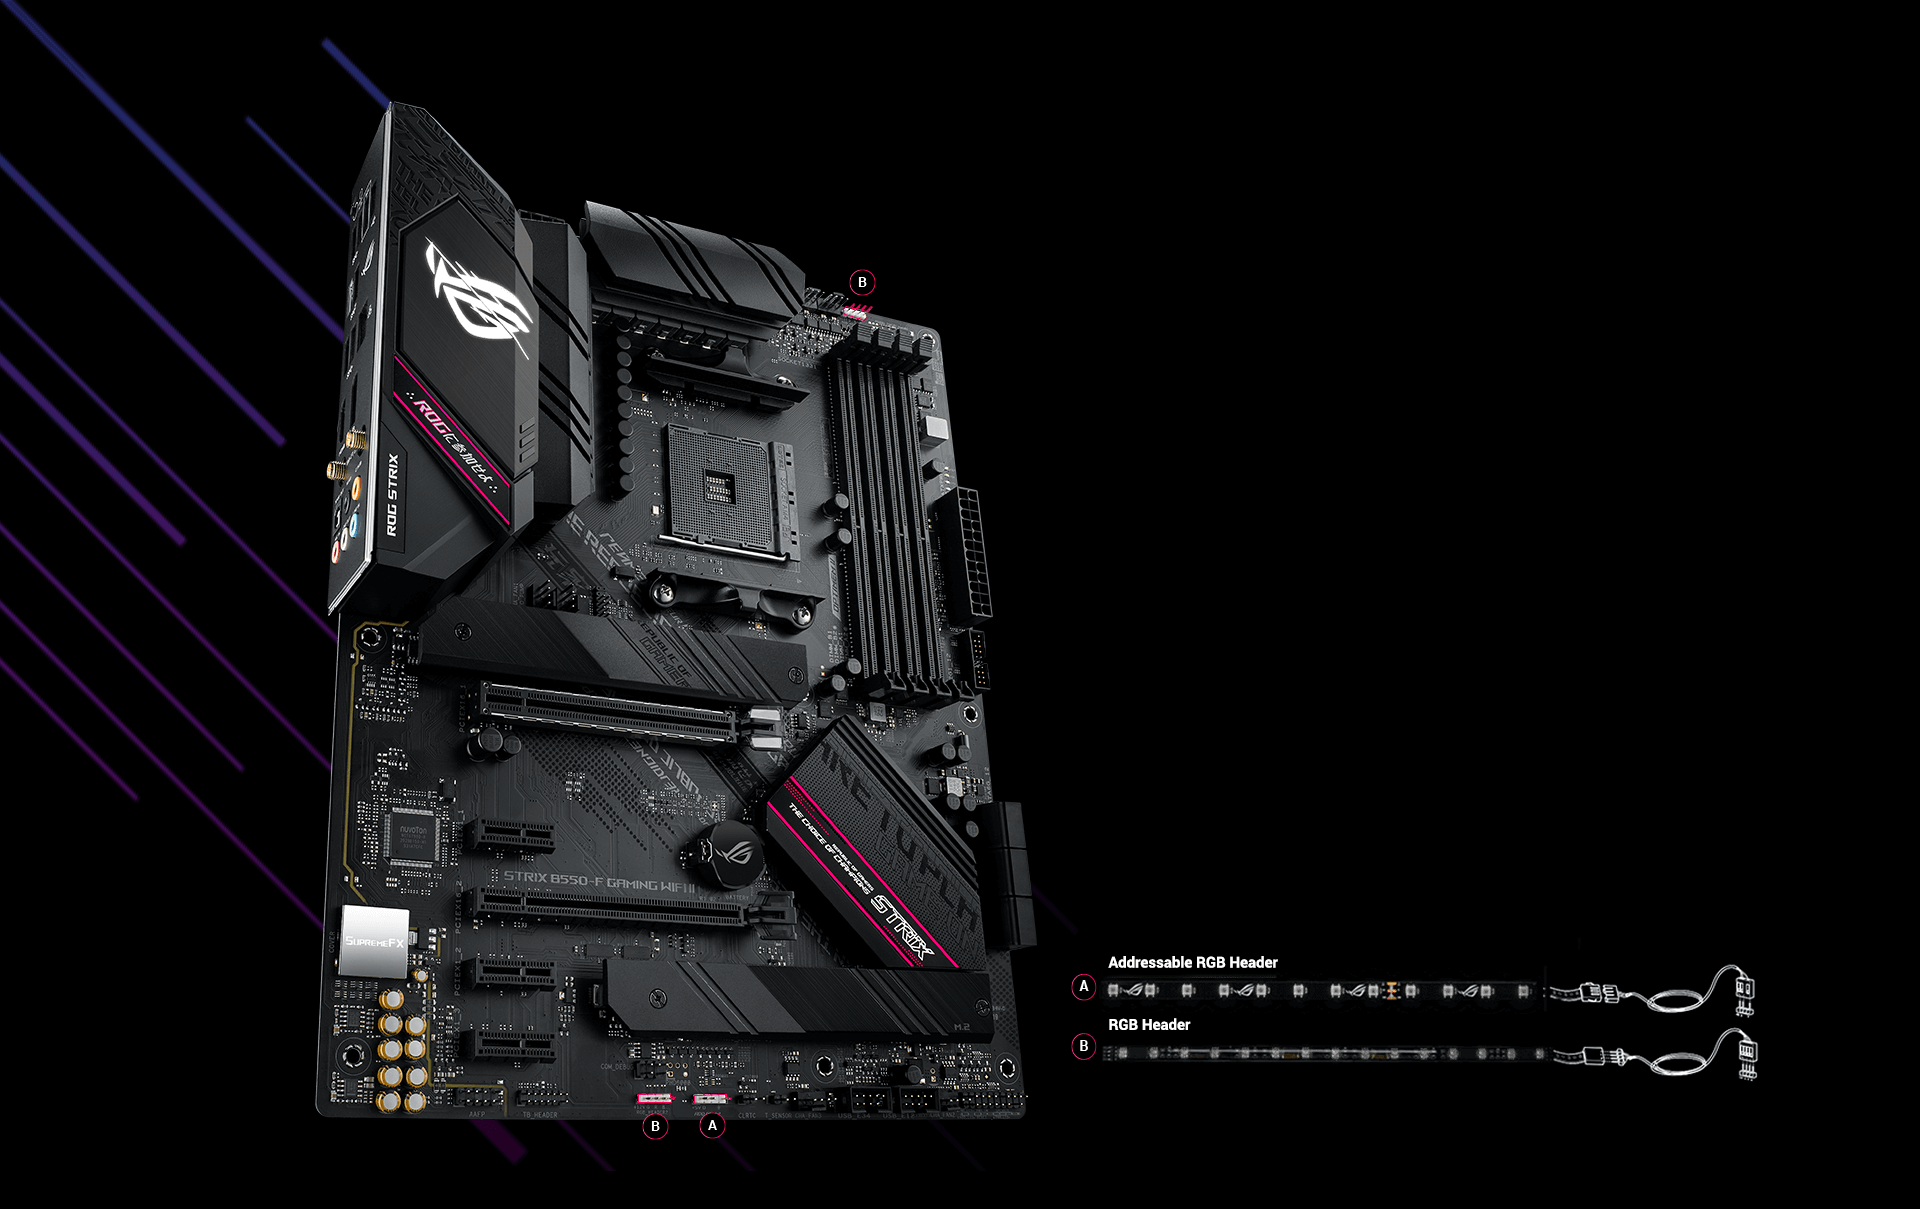  ASUS ROG Strix B550-F Gaming AMD AM4 ATX Motherboard